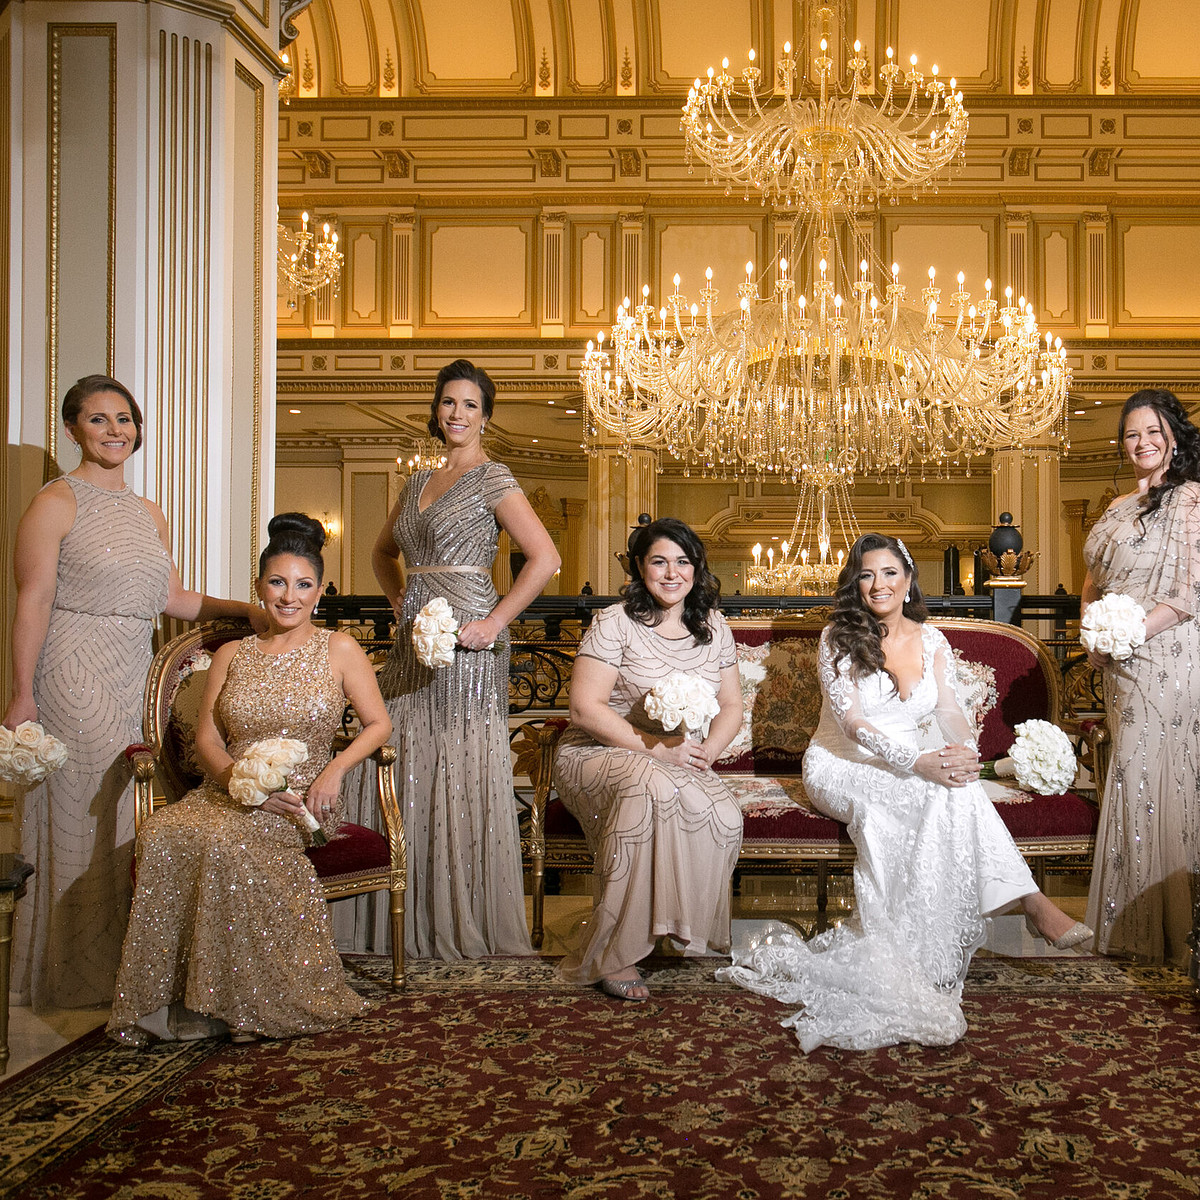 nj-wedding-venue-legacy-castle-bride-with-bridesmaids-in-gold-dresses